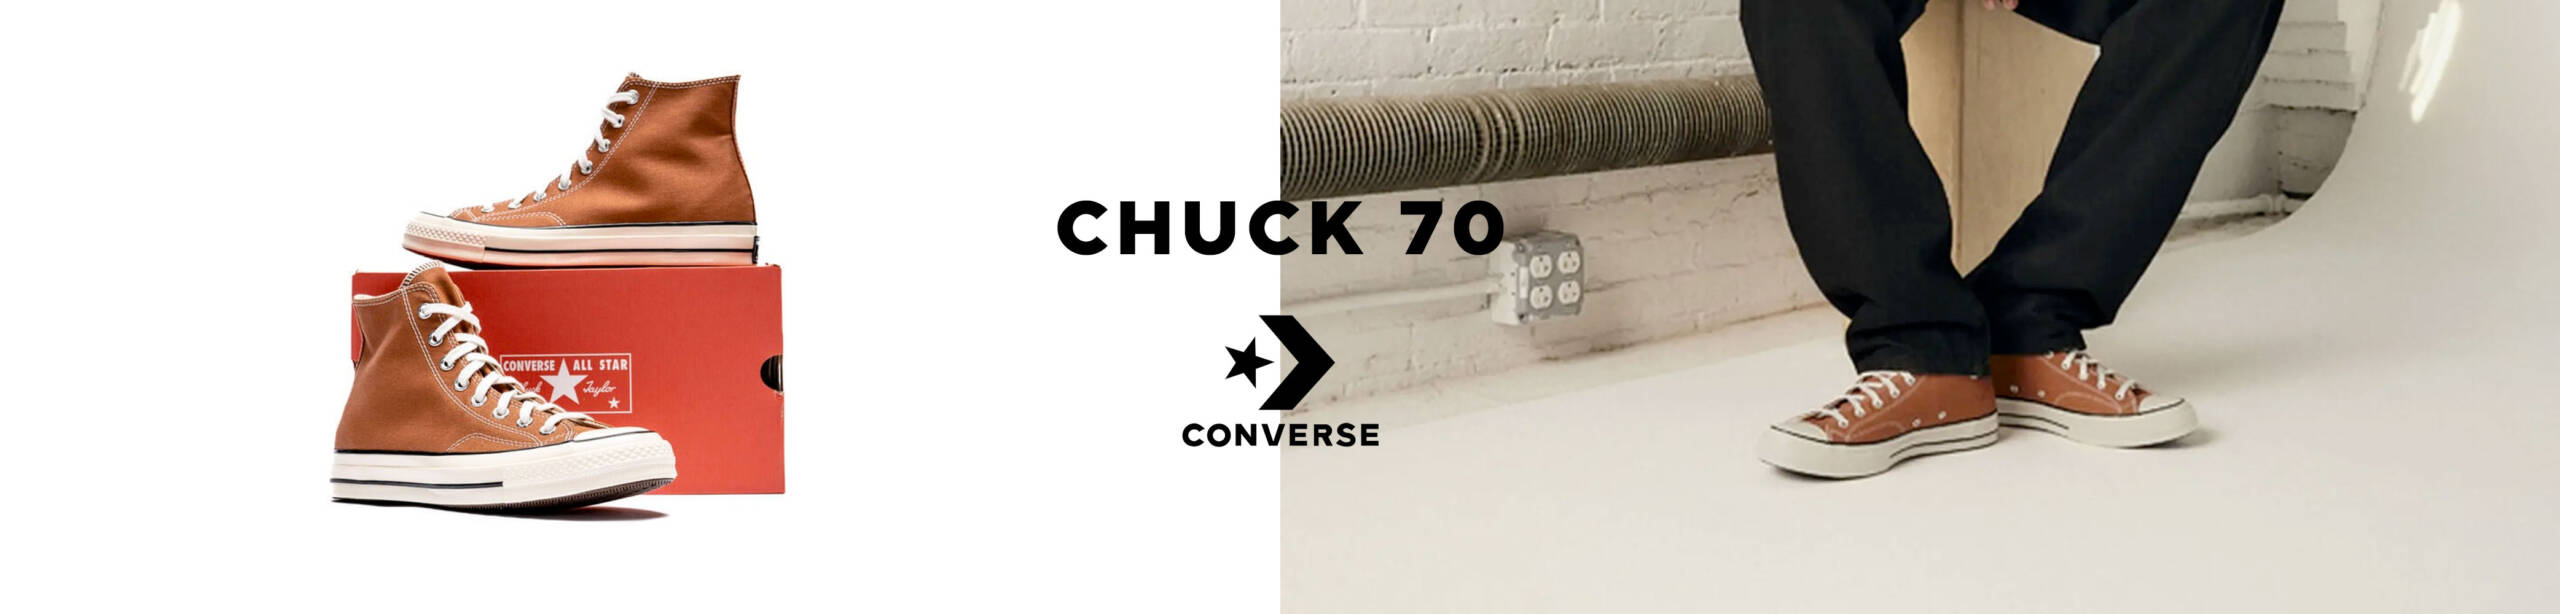 Chuck70-brown-WEB